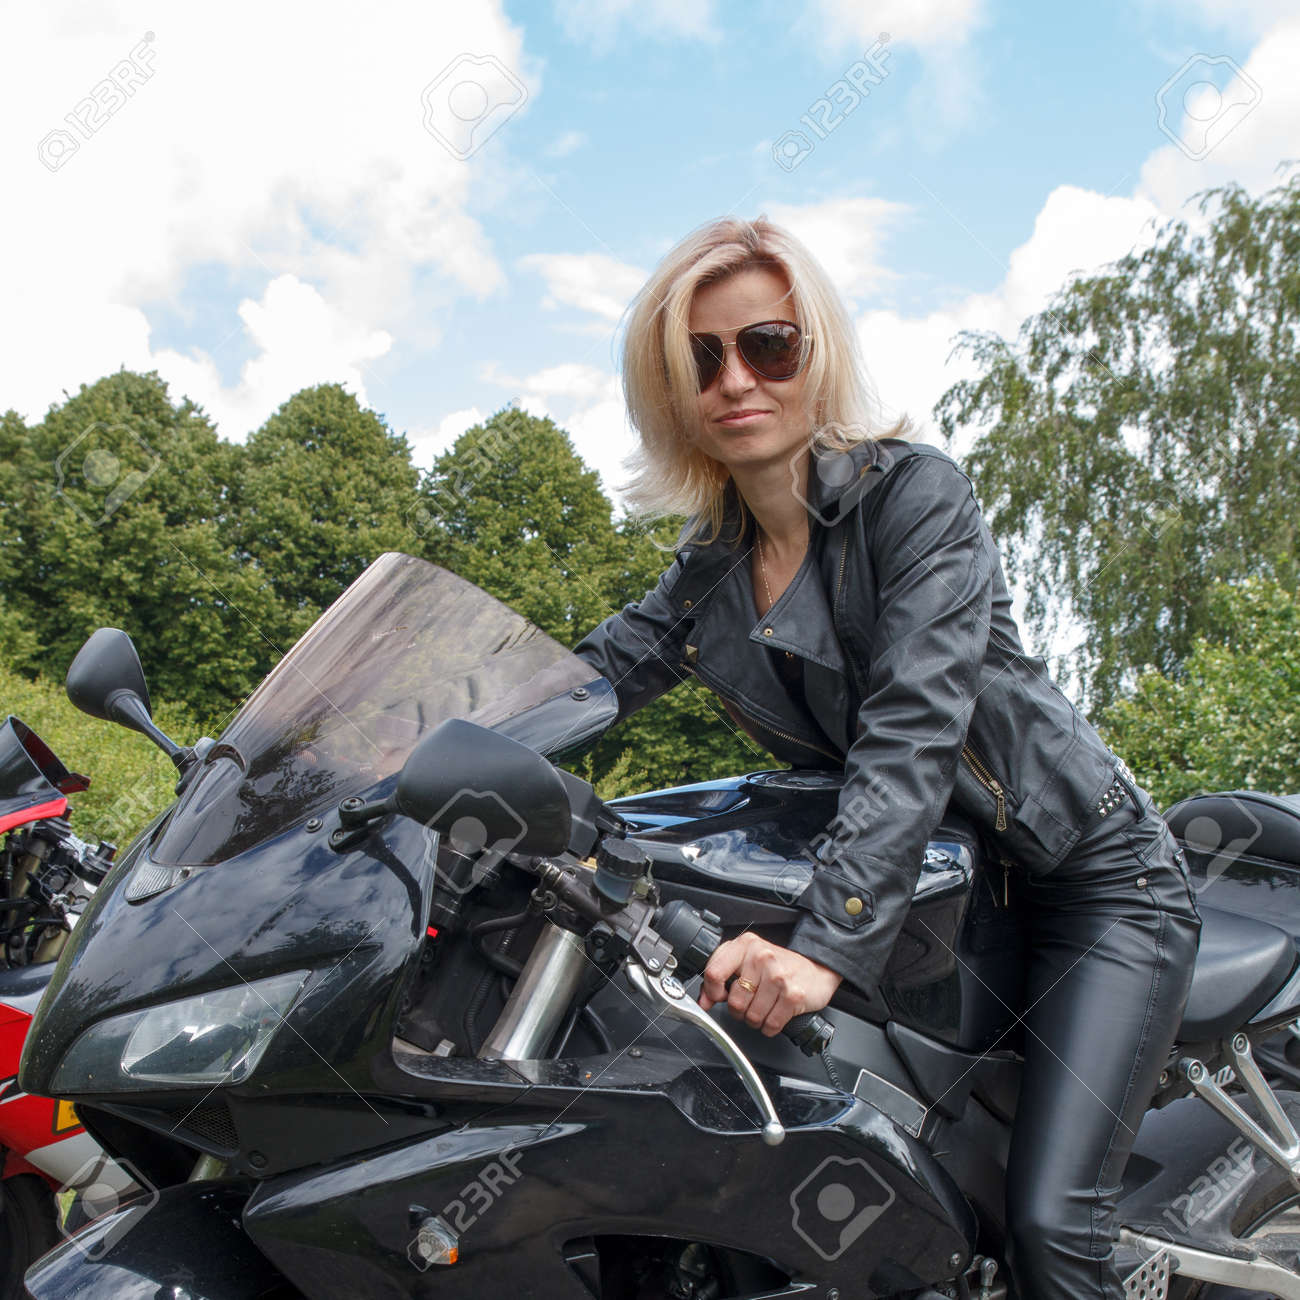 aswin srinivas recommends Motorcycle Girl Pics